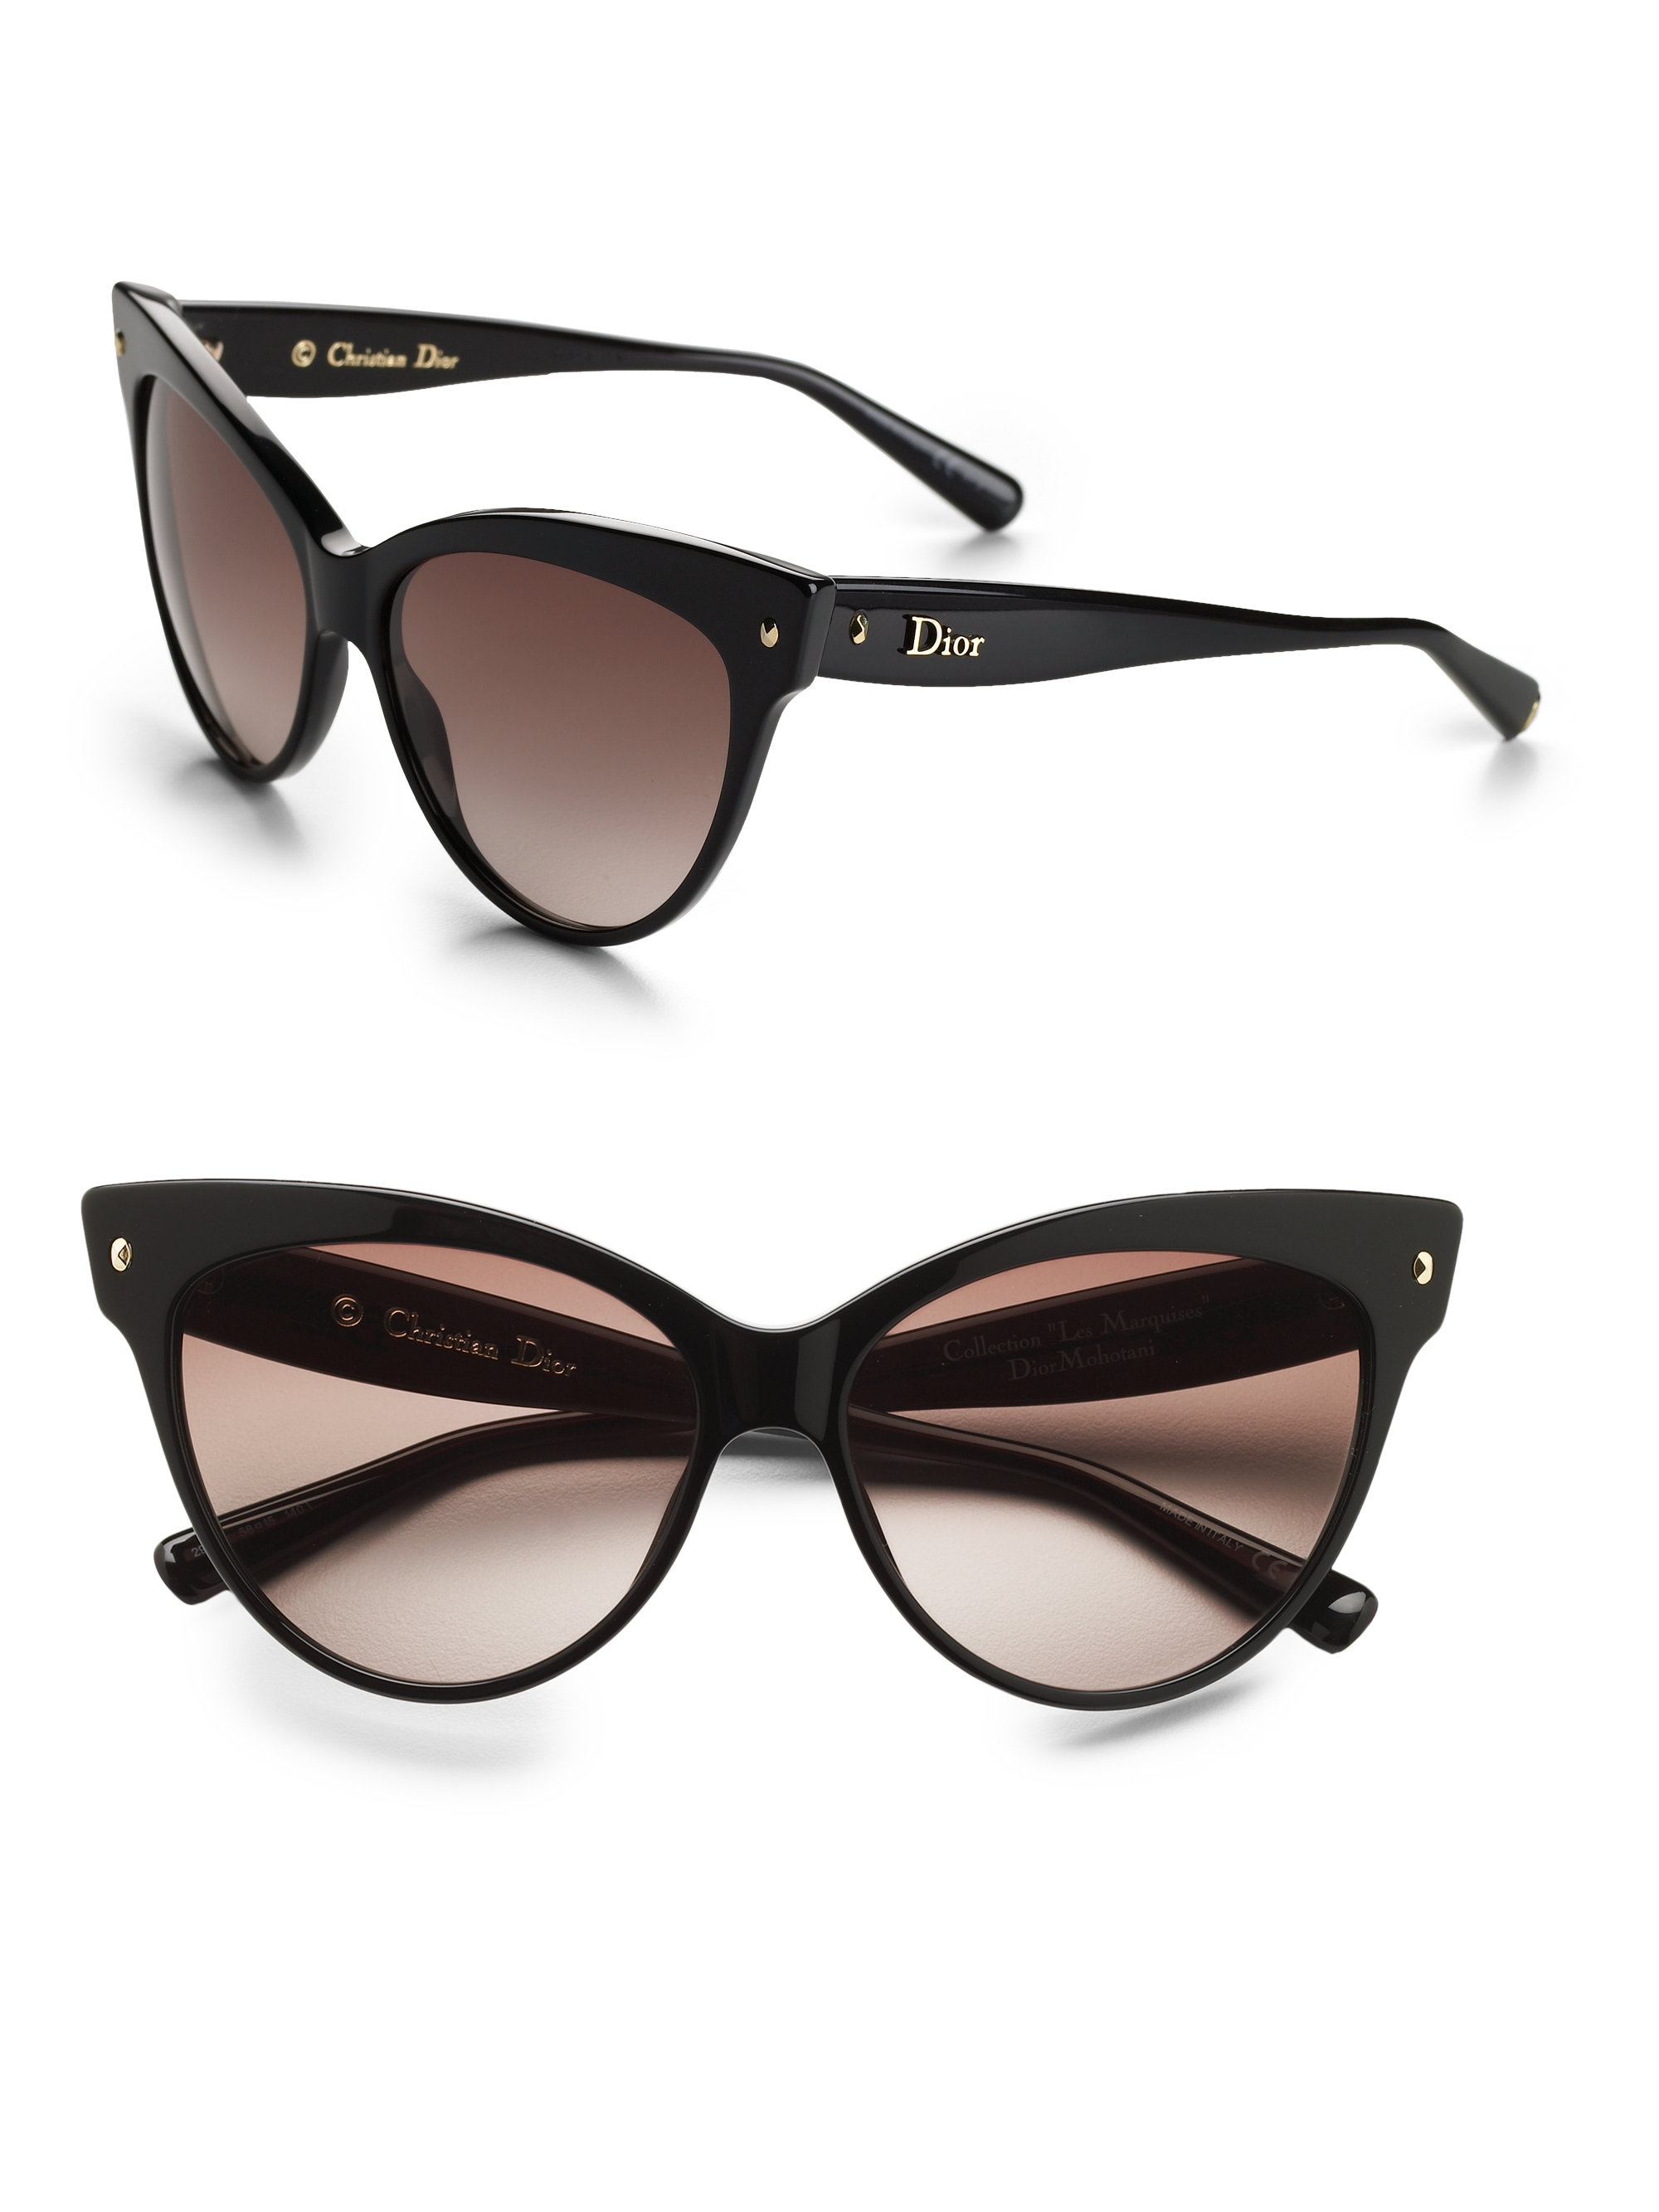 Lyst - Dior Cat's-eye Sunglasses in Brown